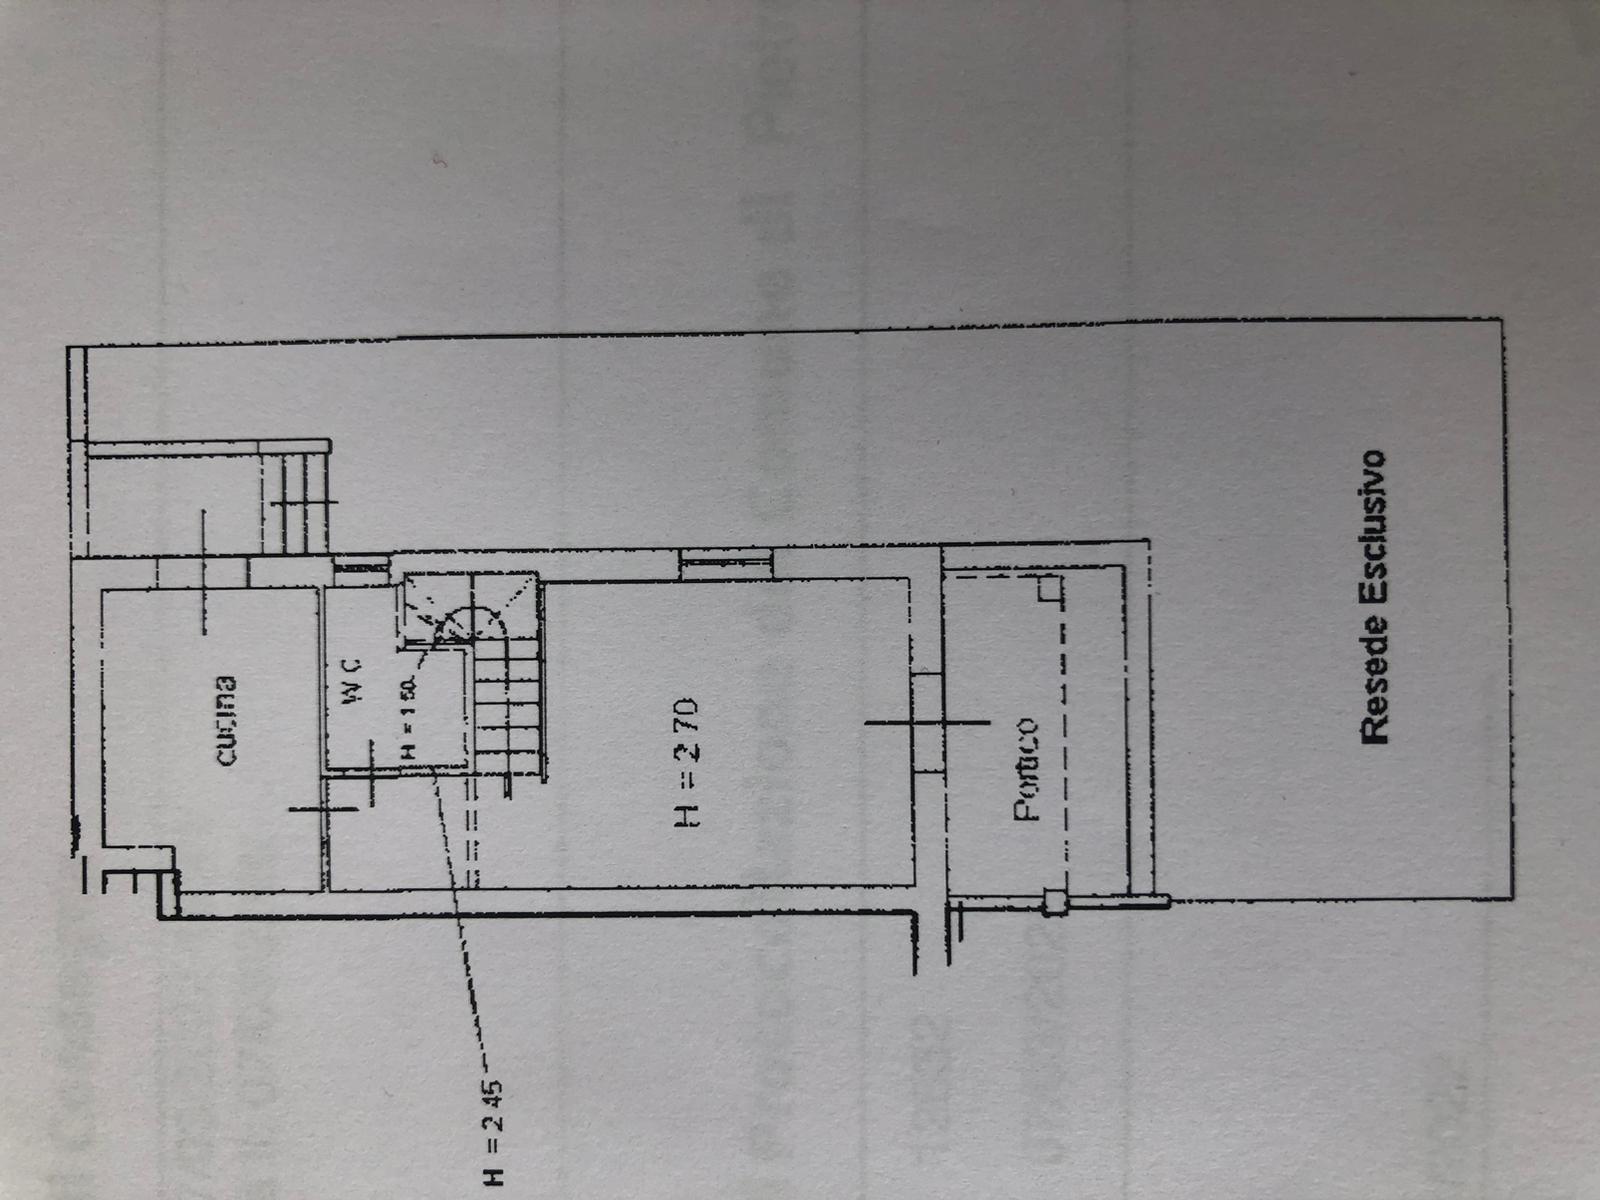 Semi-detached house for sale, ref. 27973 (Plan 4/5)